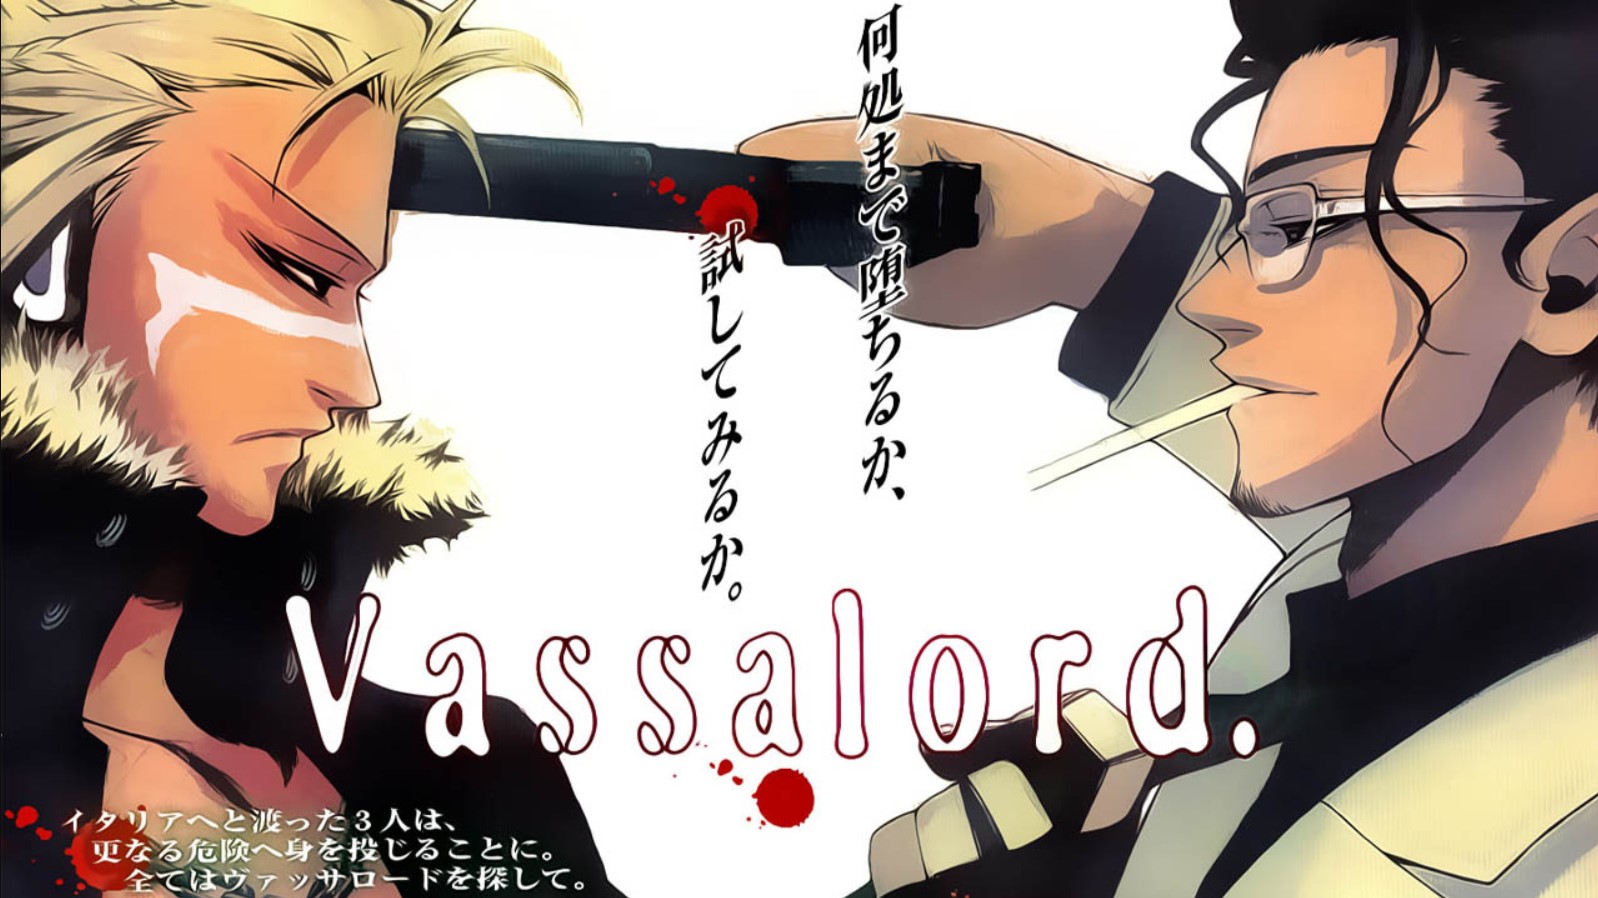 Vassalord- Anime like Noblesse!